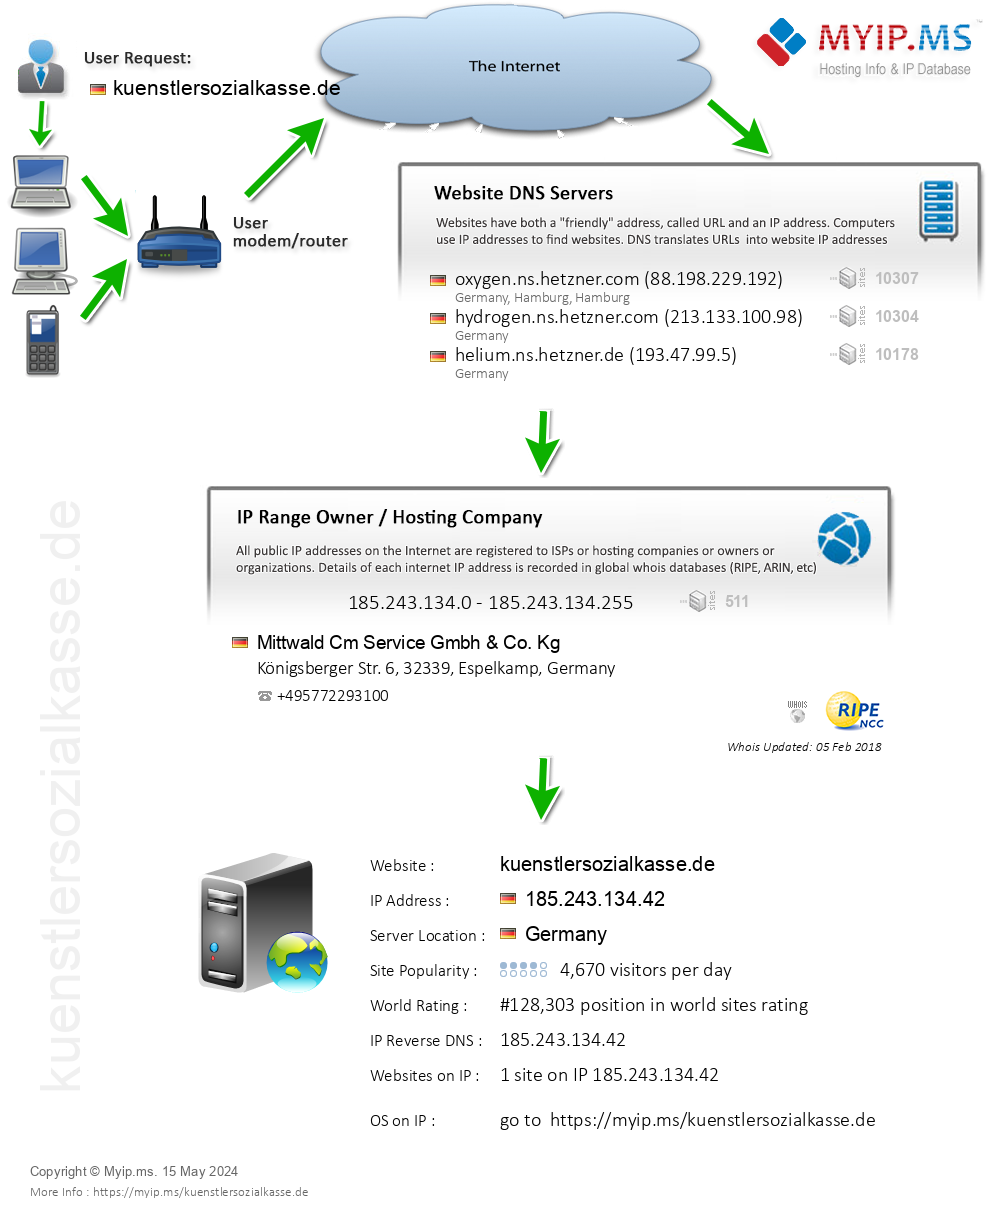 Kuenstlersozialkasse.de - Website Hosting Visual IP Diagram